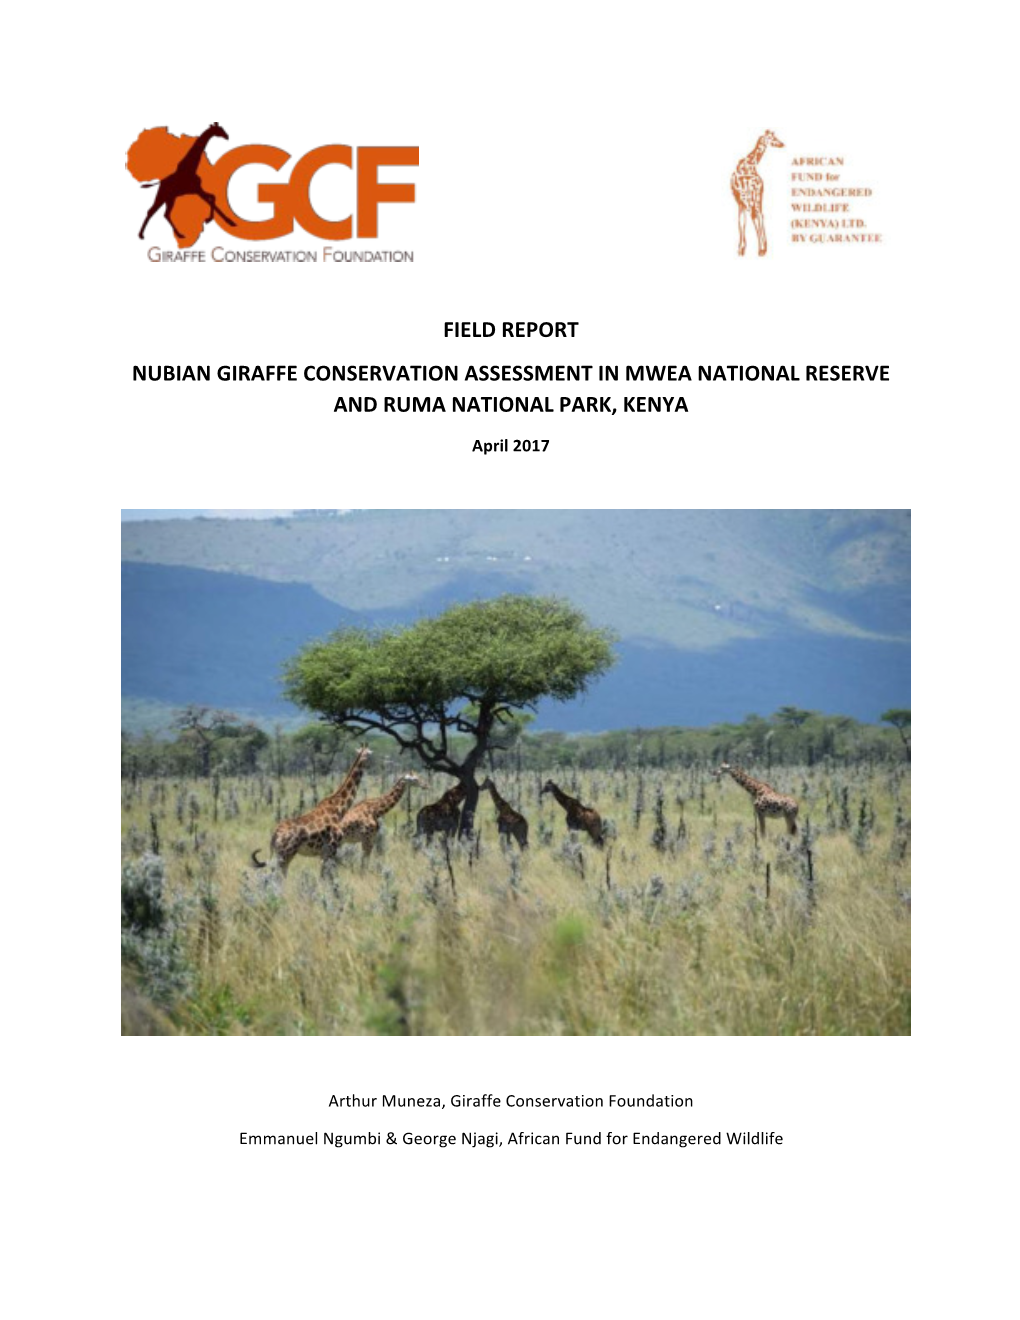 Field Report Nubian Giraffe Conservation Assessment in Mwea National Reserve and Ruma National Park, Kenya